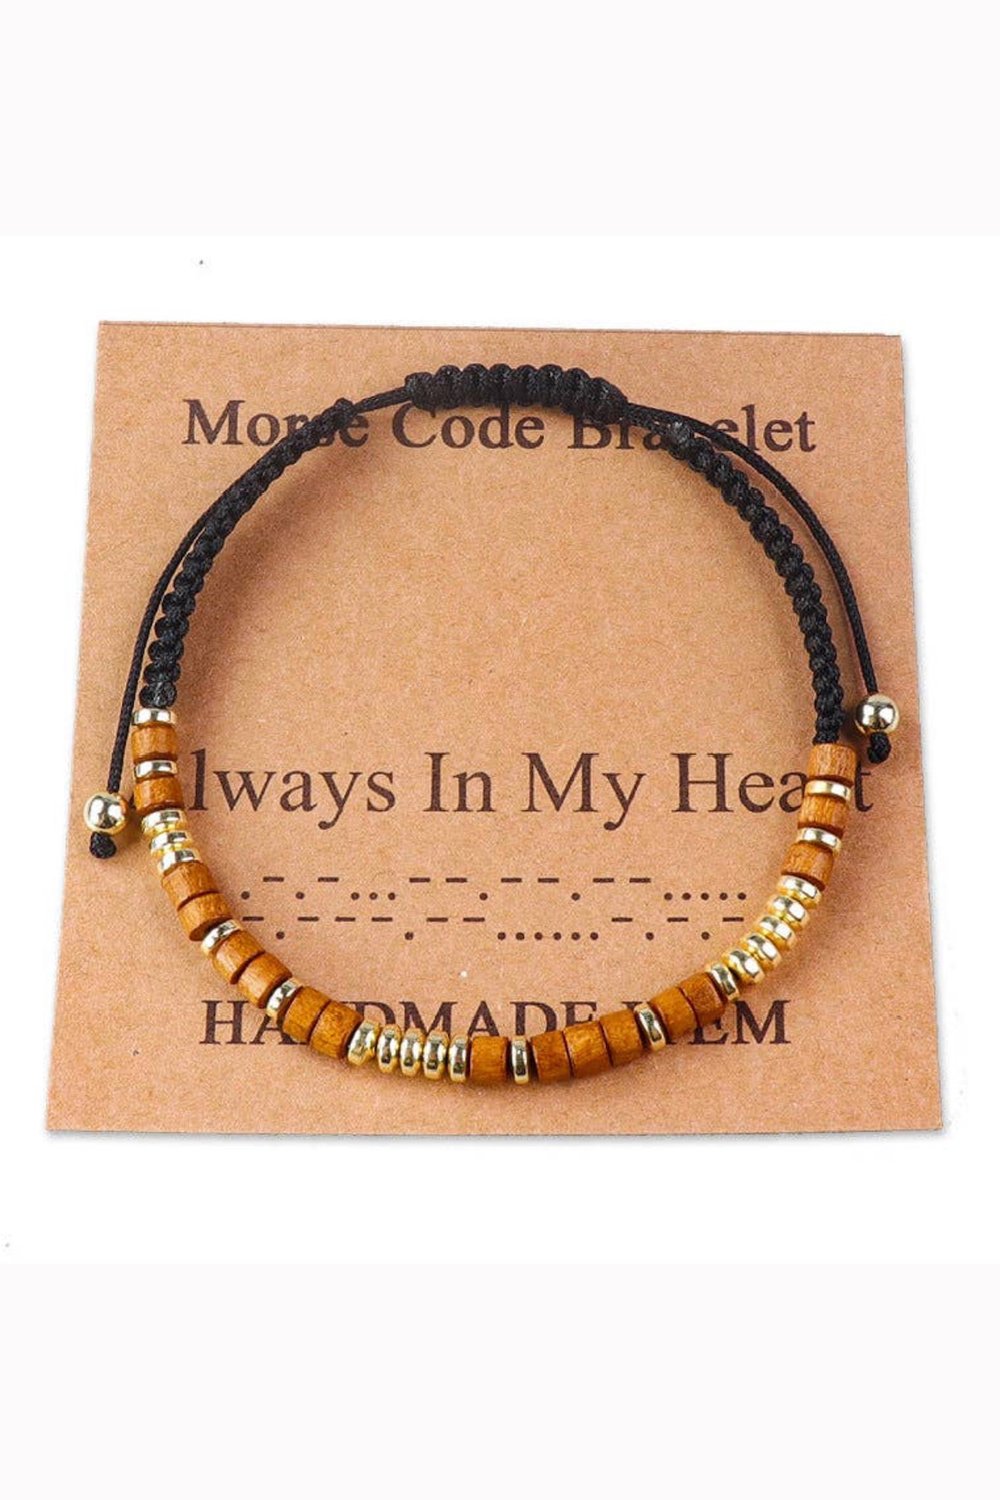 Make a Morse Code Bracelet 